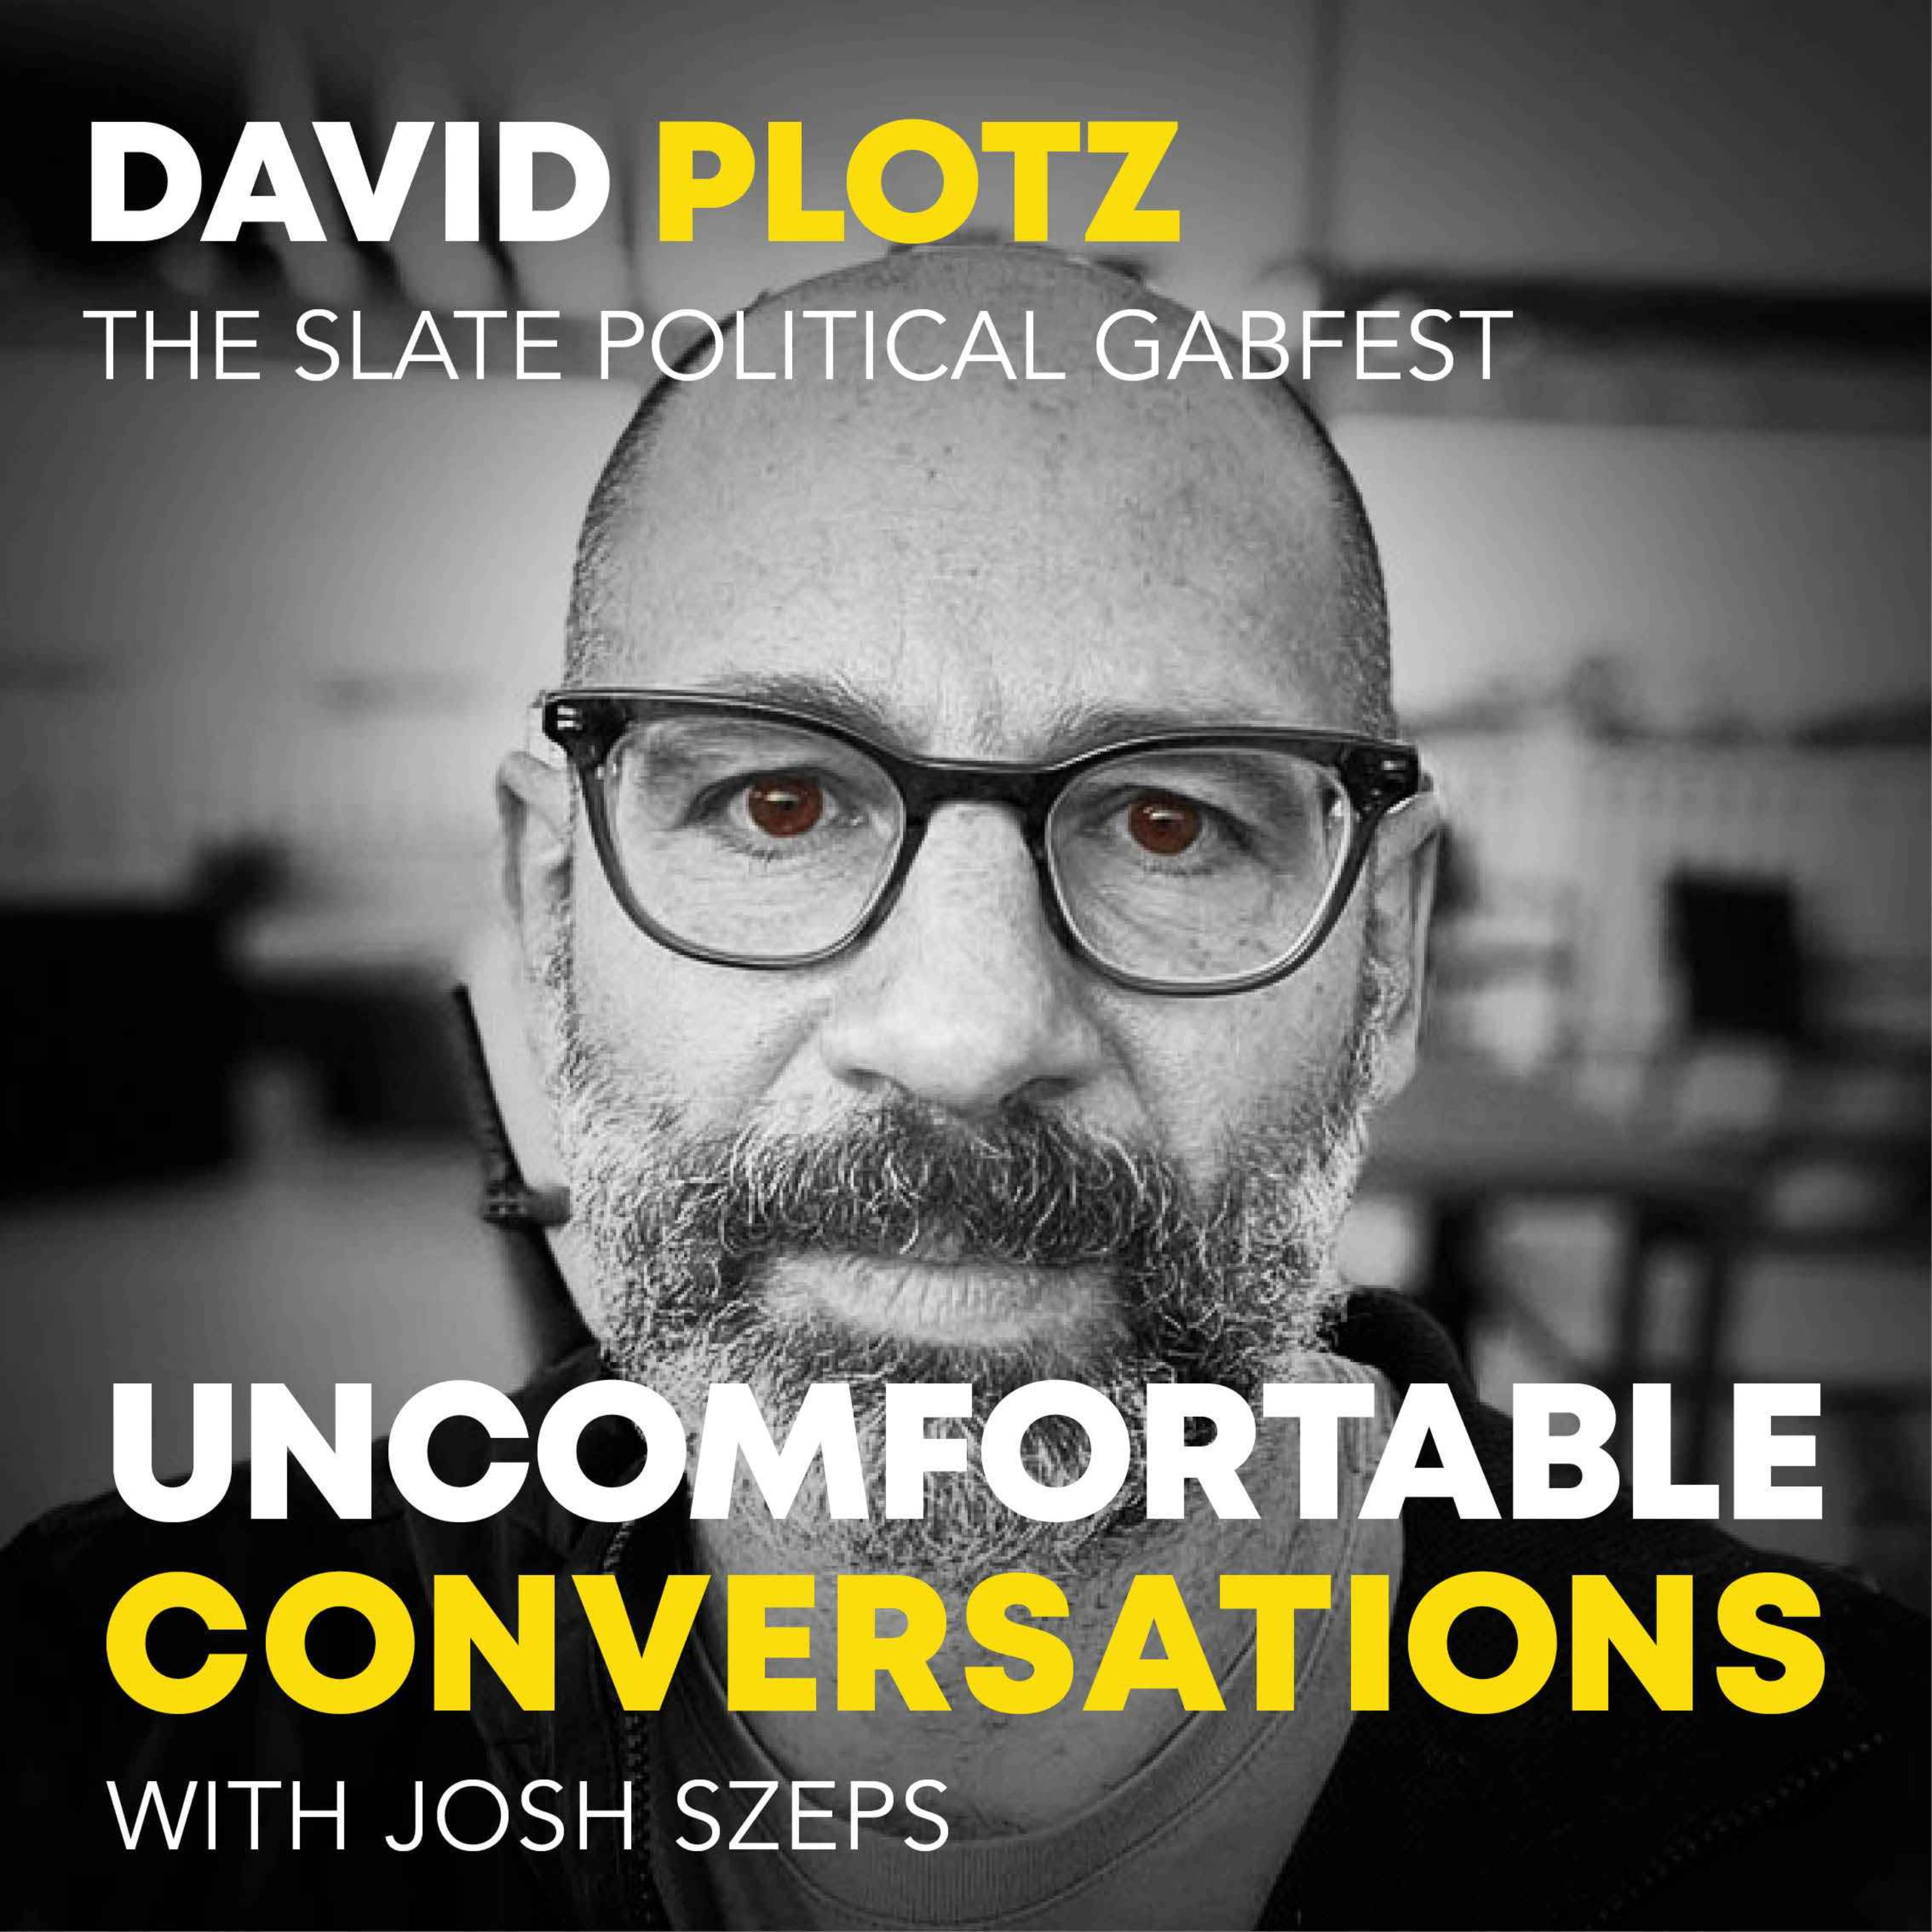 "The Slate Political Gabfest" with David Plotz